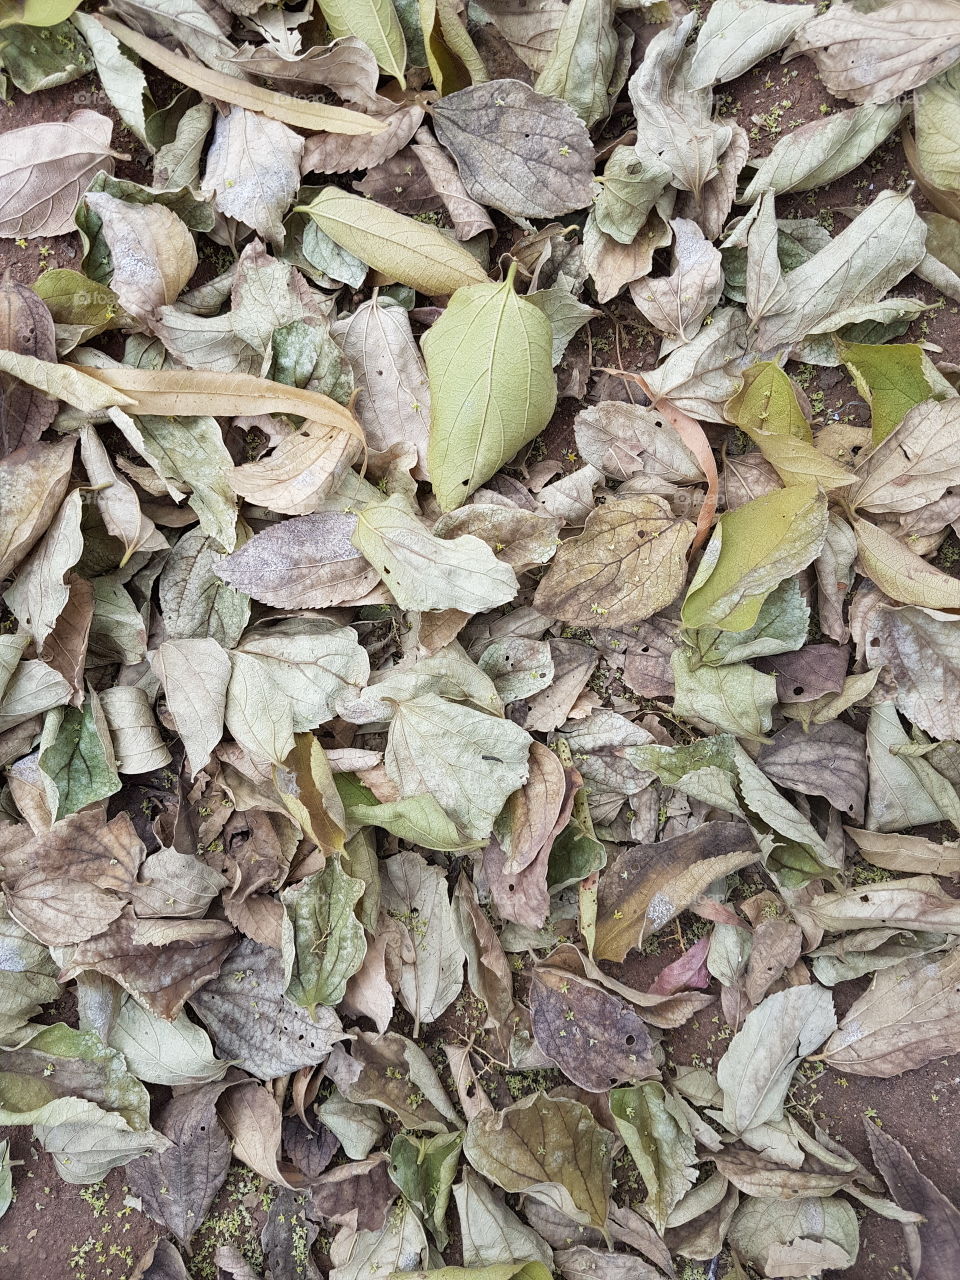 Dry winter leaves